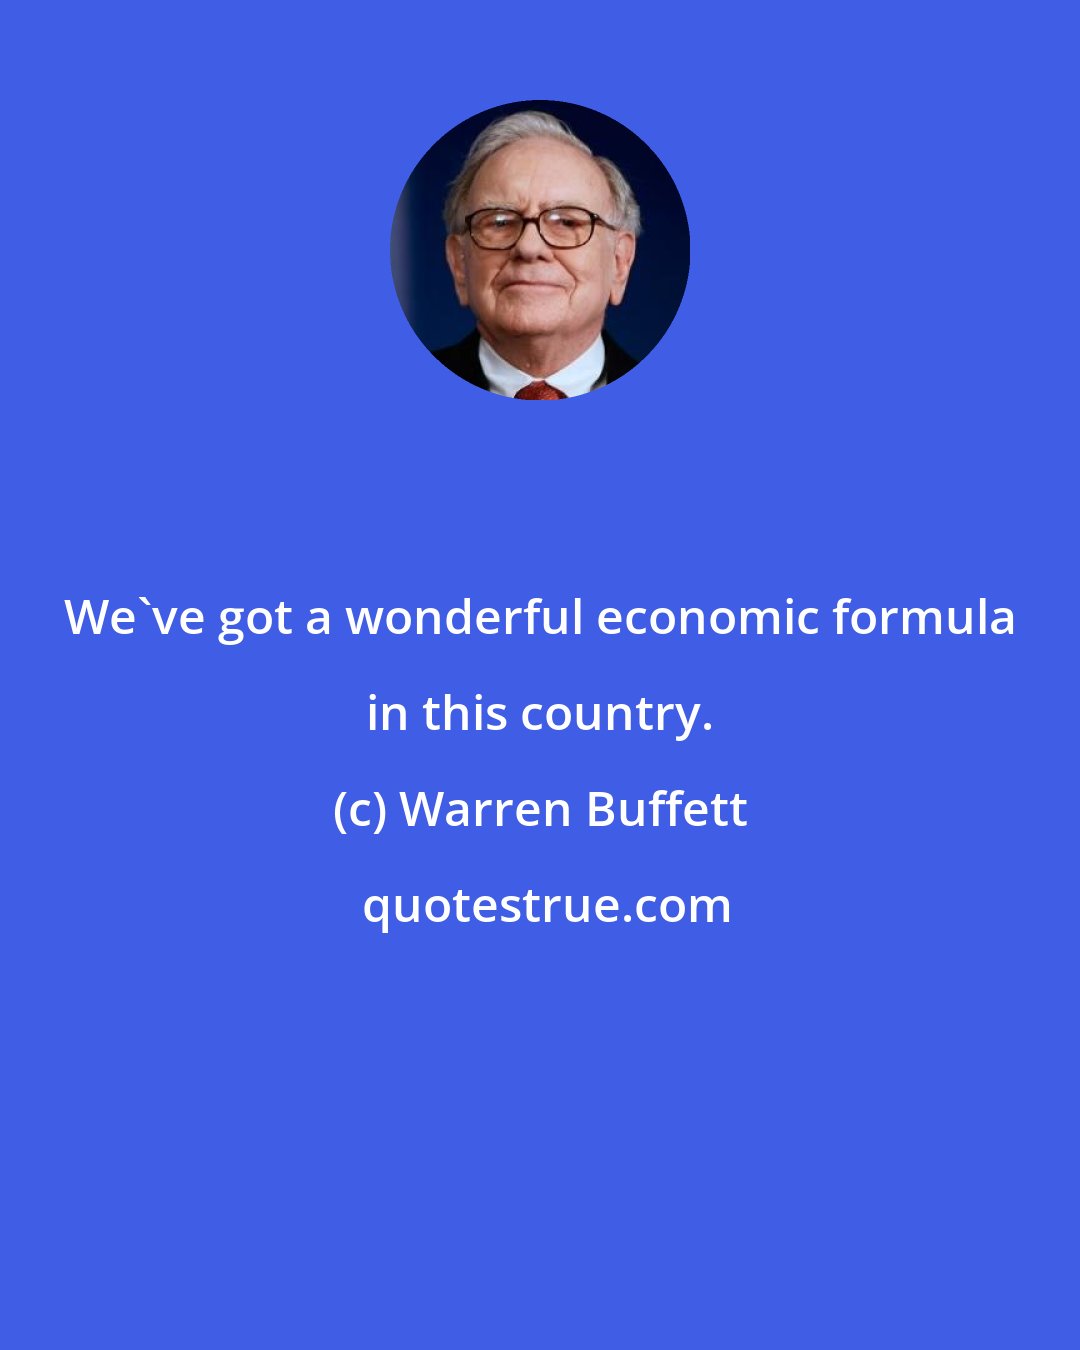 Warren Buffett: We've got a wonderful economic formula in this country.